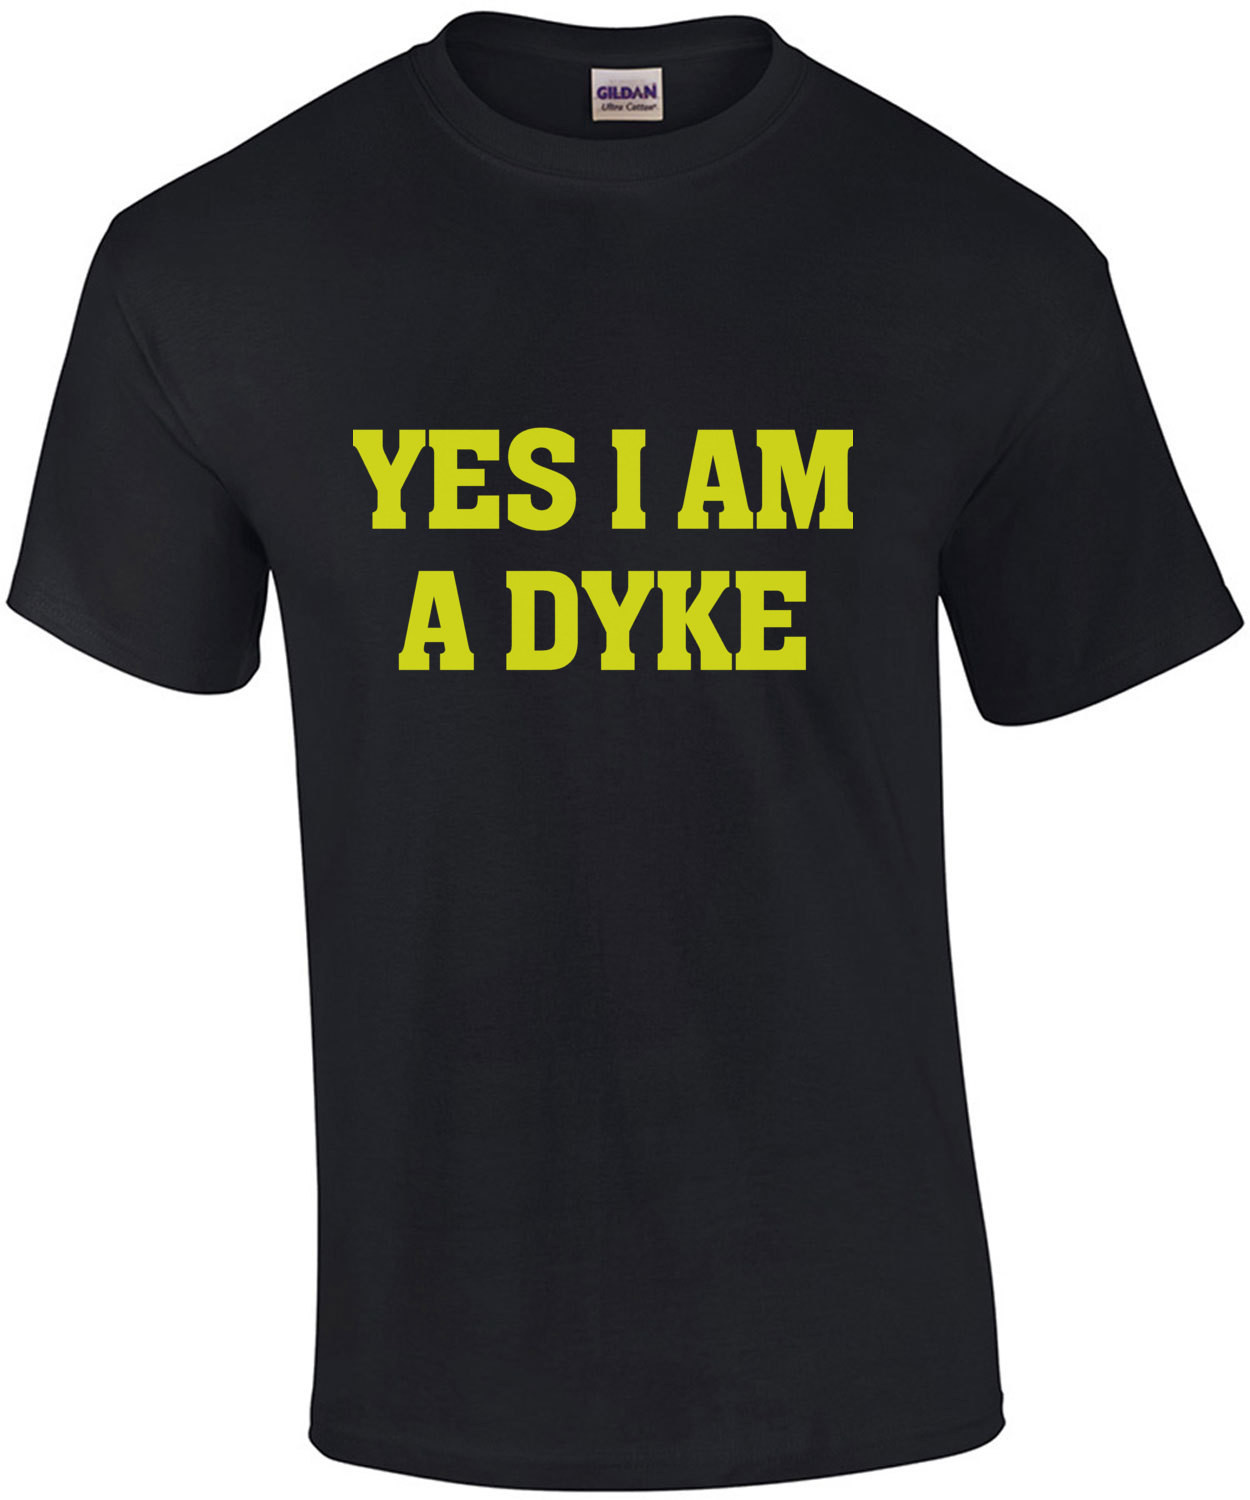 Yes I am a dyke - lesbian t-shirt